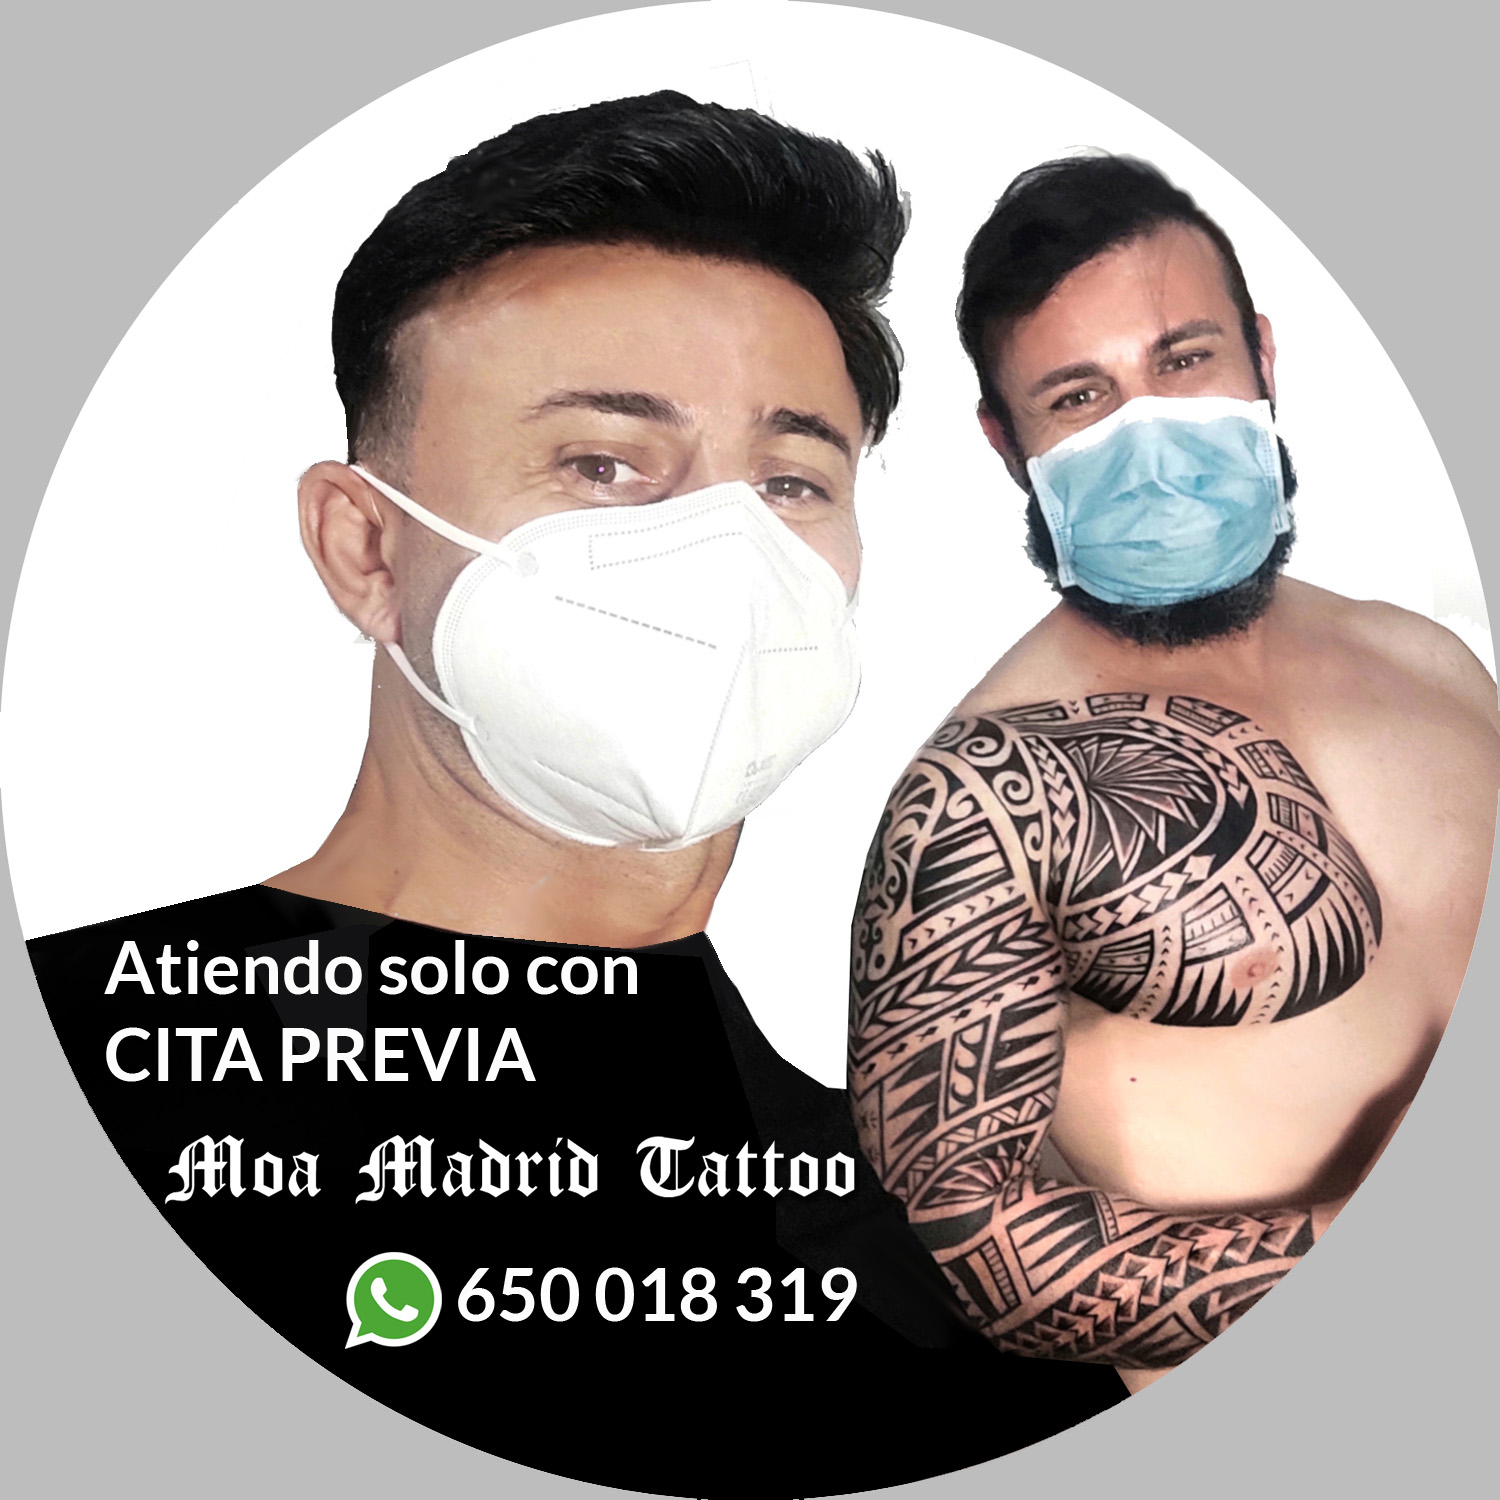 WhatsApp Moa Madrid Tattoo 650 018 319